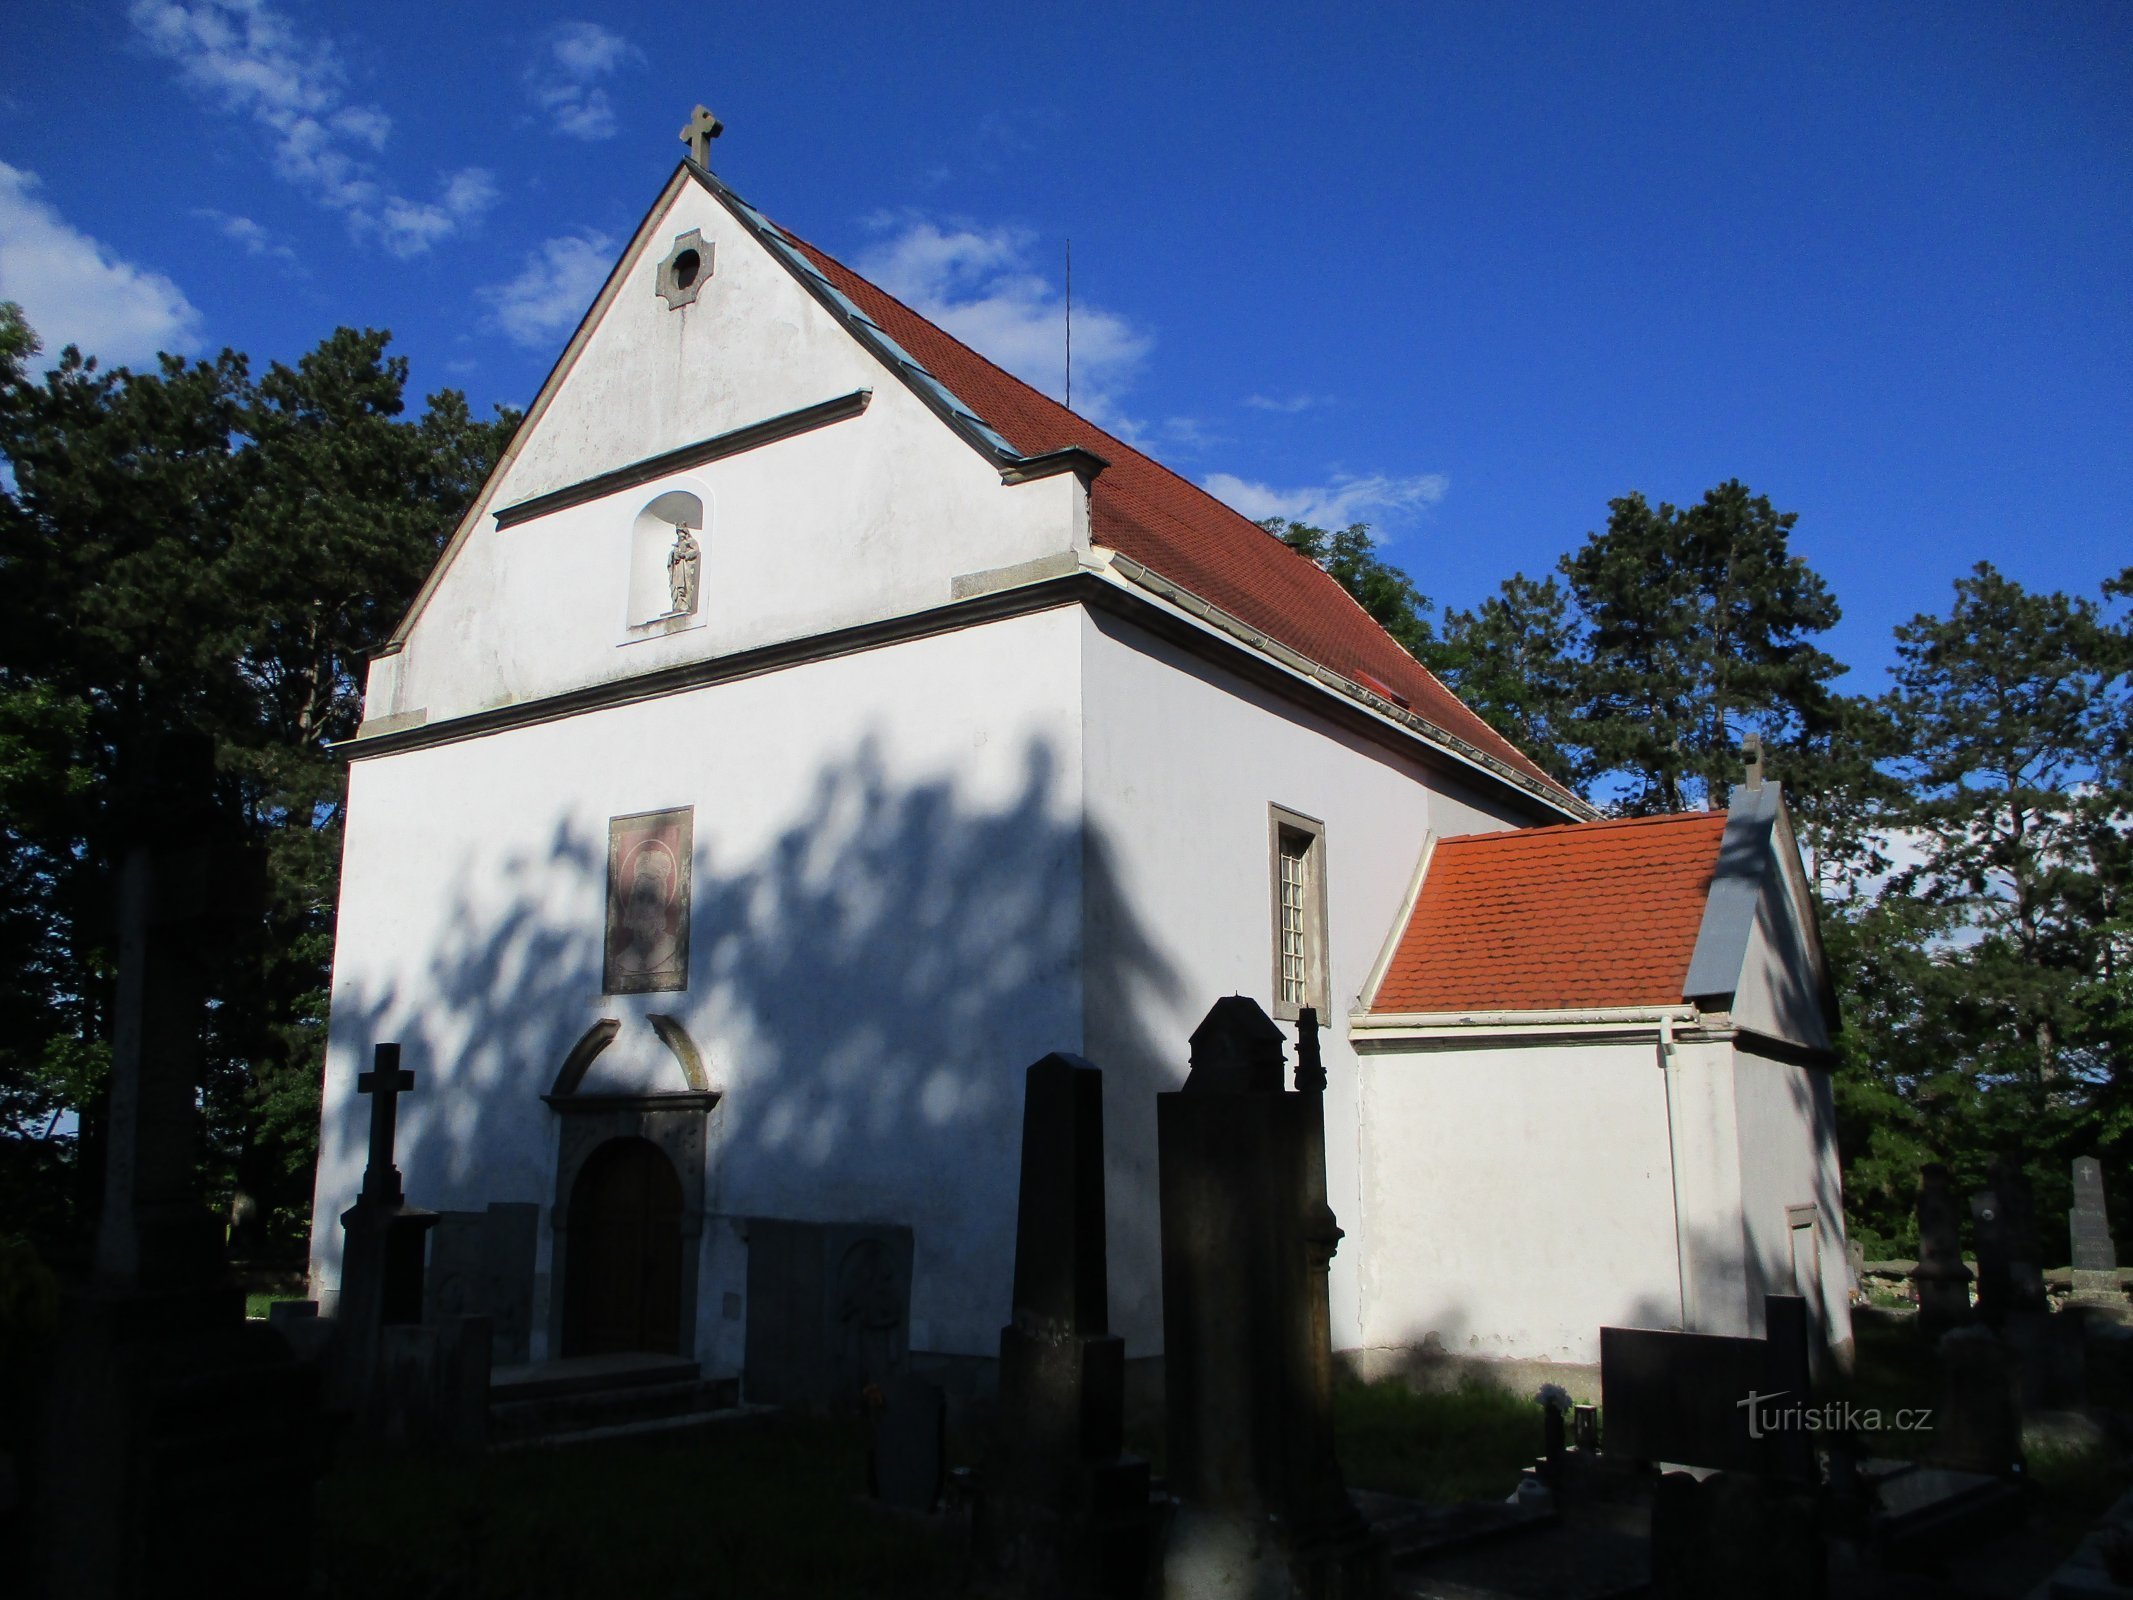 Церковь св. Вацлав (Habřina, 2.6.2019 июня XNUMX г.)